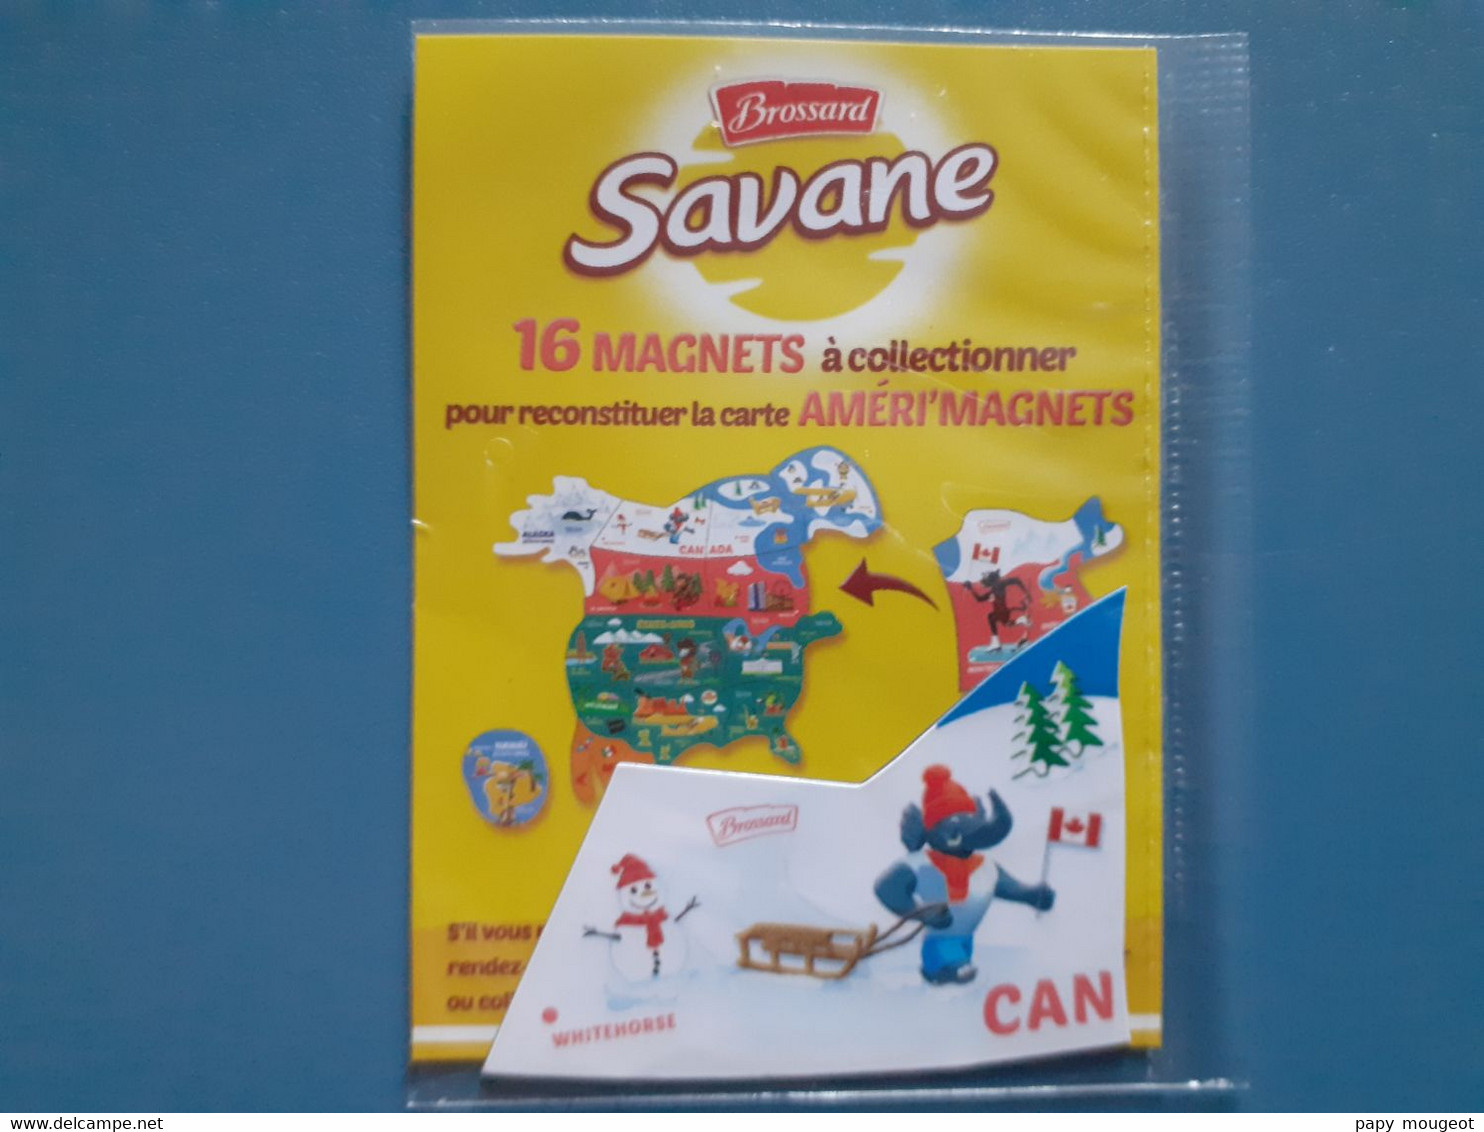 Brossard Savane - 16 Magnets Carte AMERI'MAGNETS - Canada - Whitehorse - Reklame